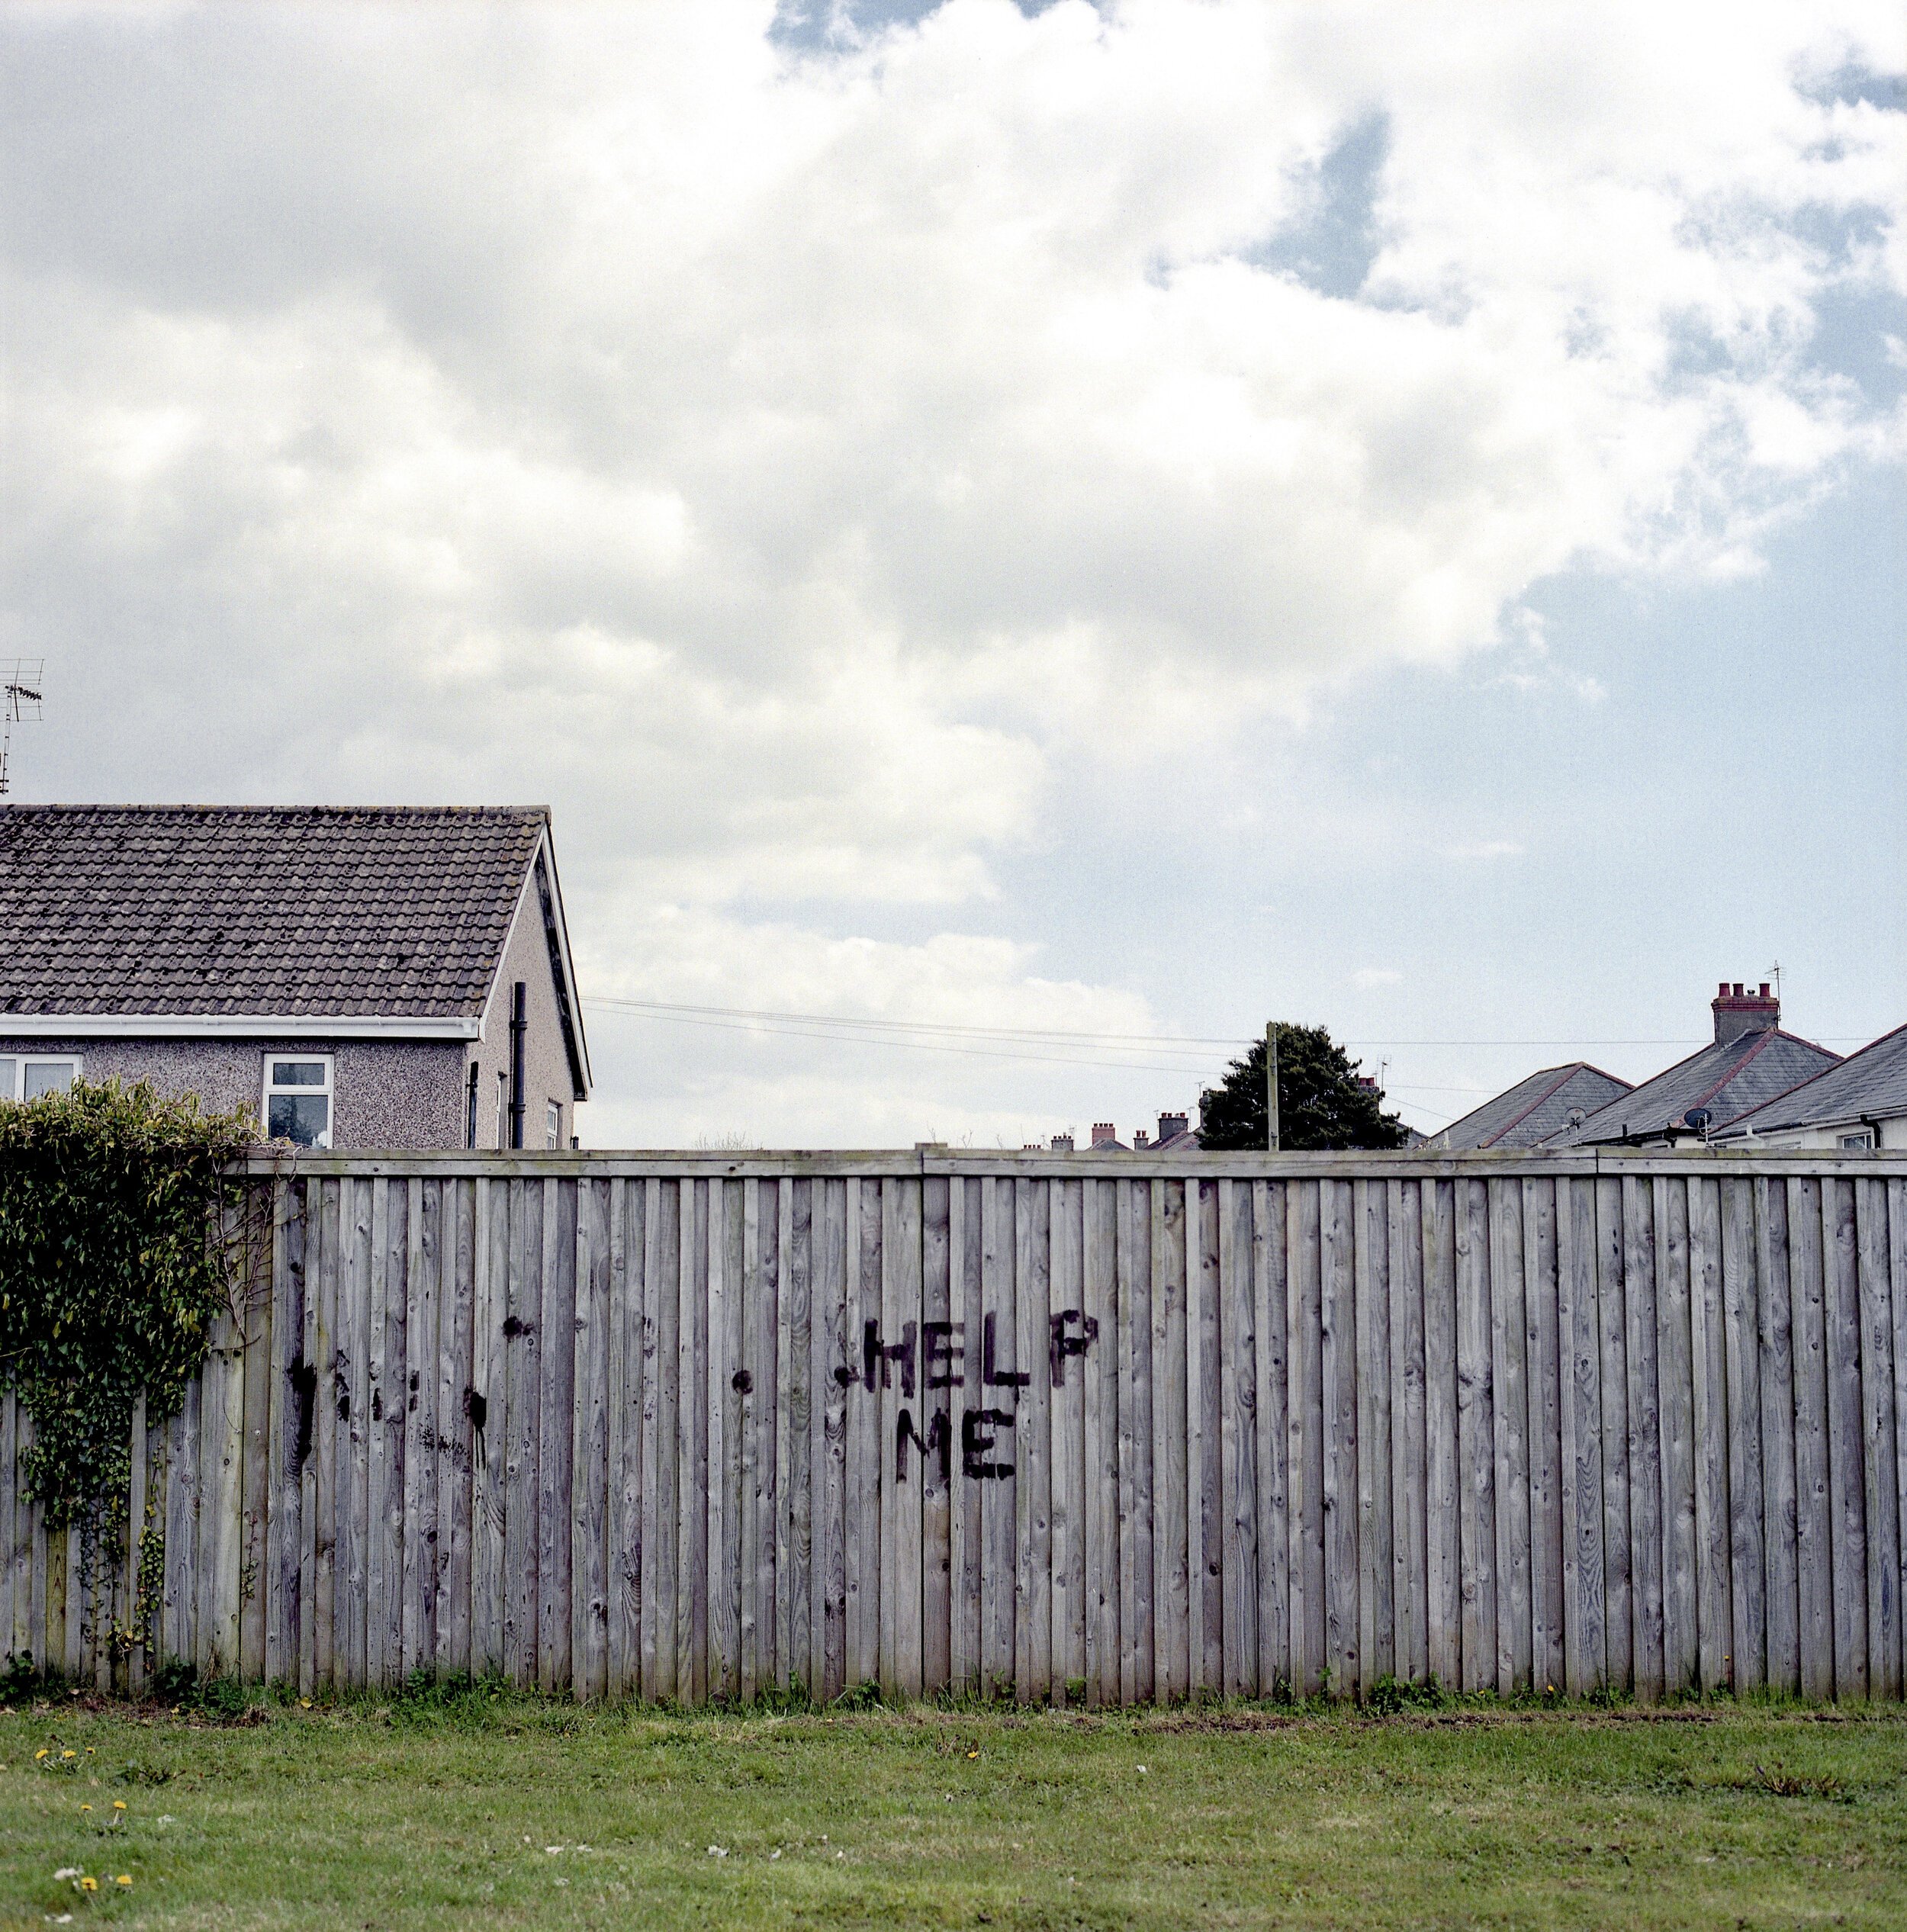 “Help Me, Bridgend, Wales, 2013” by Dan Wood | Hasselblad 500cm, Kodak Portra 160 FIlm